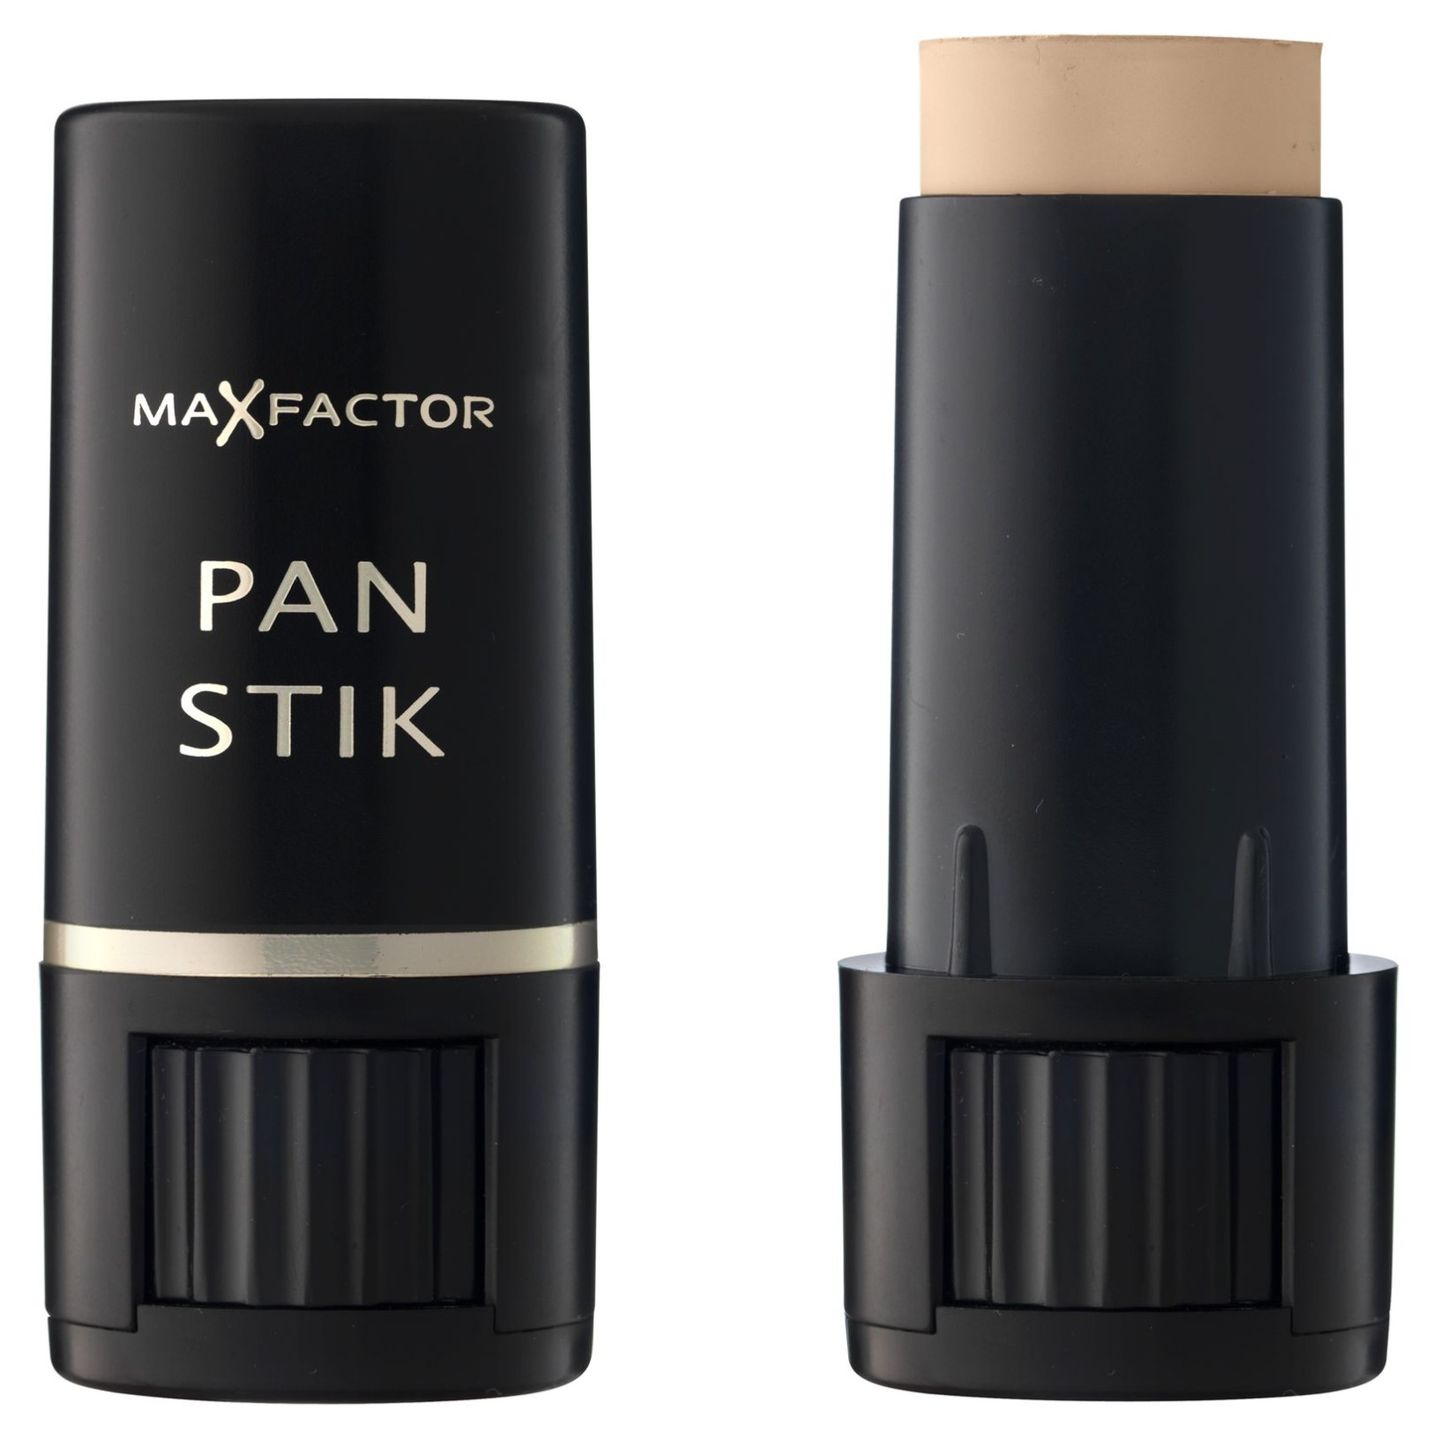 Max Factor Pan Stik Foundation Stick – True Beige